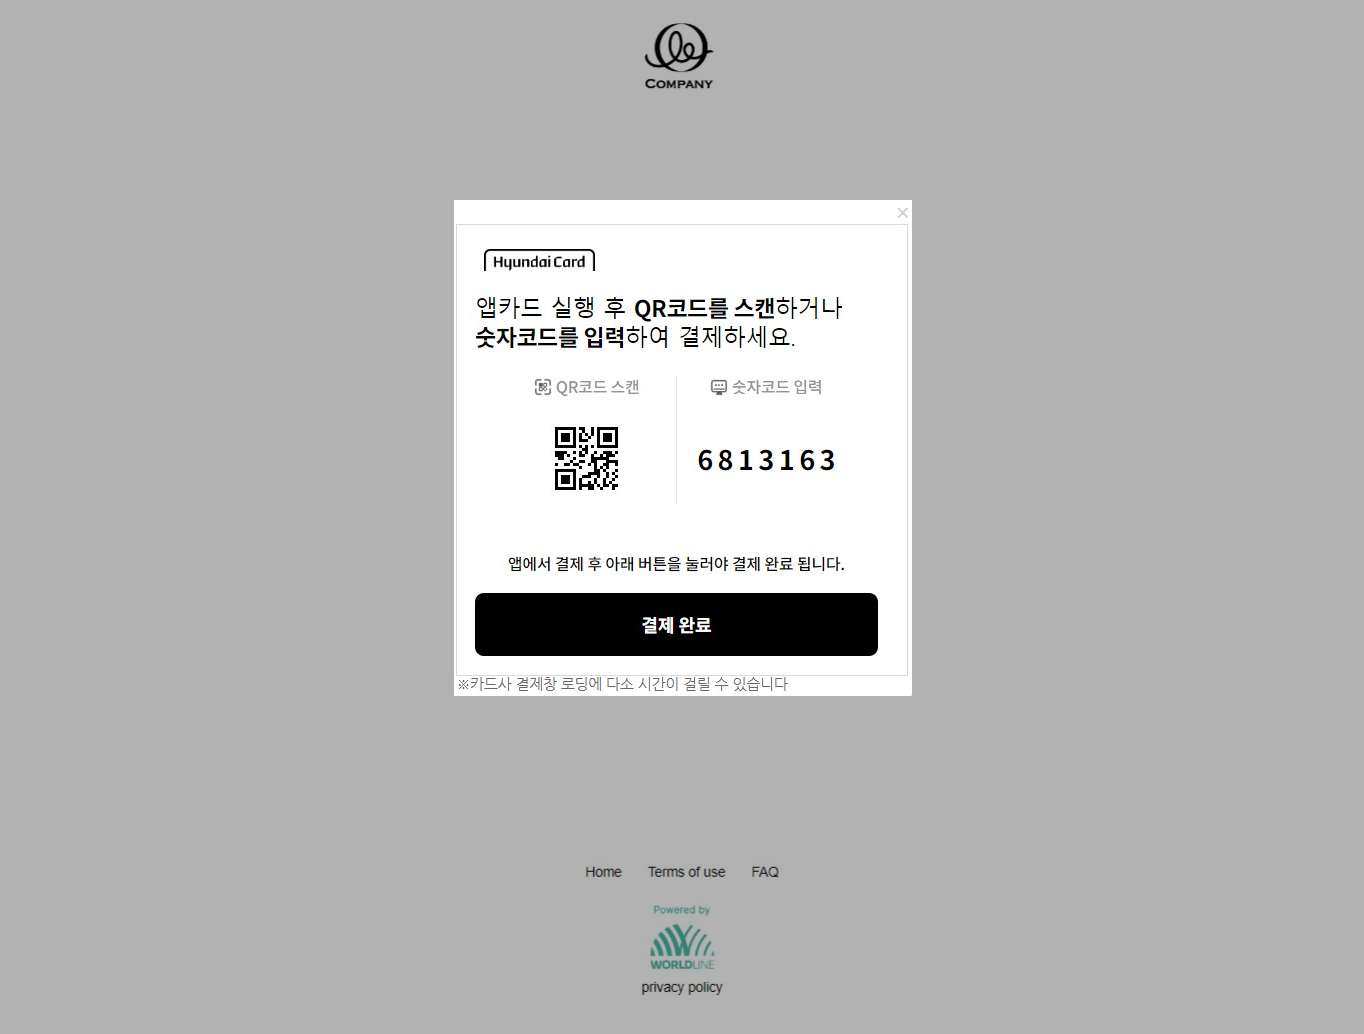 hyundai-card-authenticated-consumer-experience-desktop-flow-03